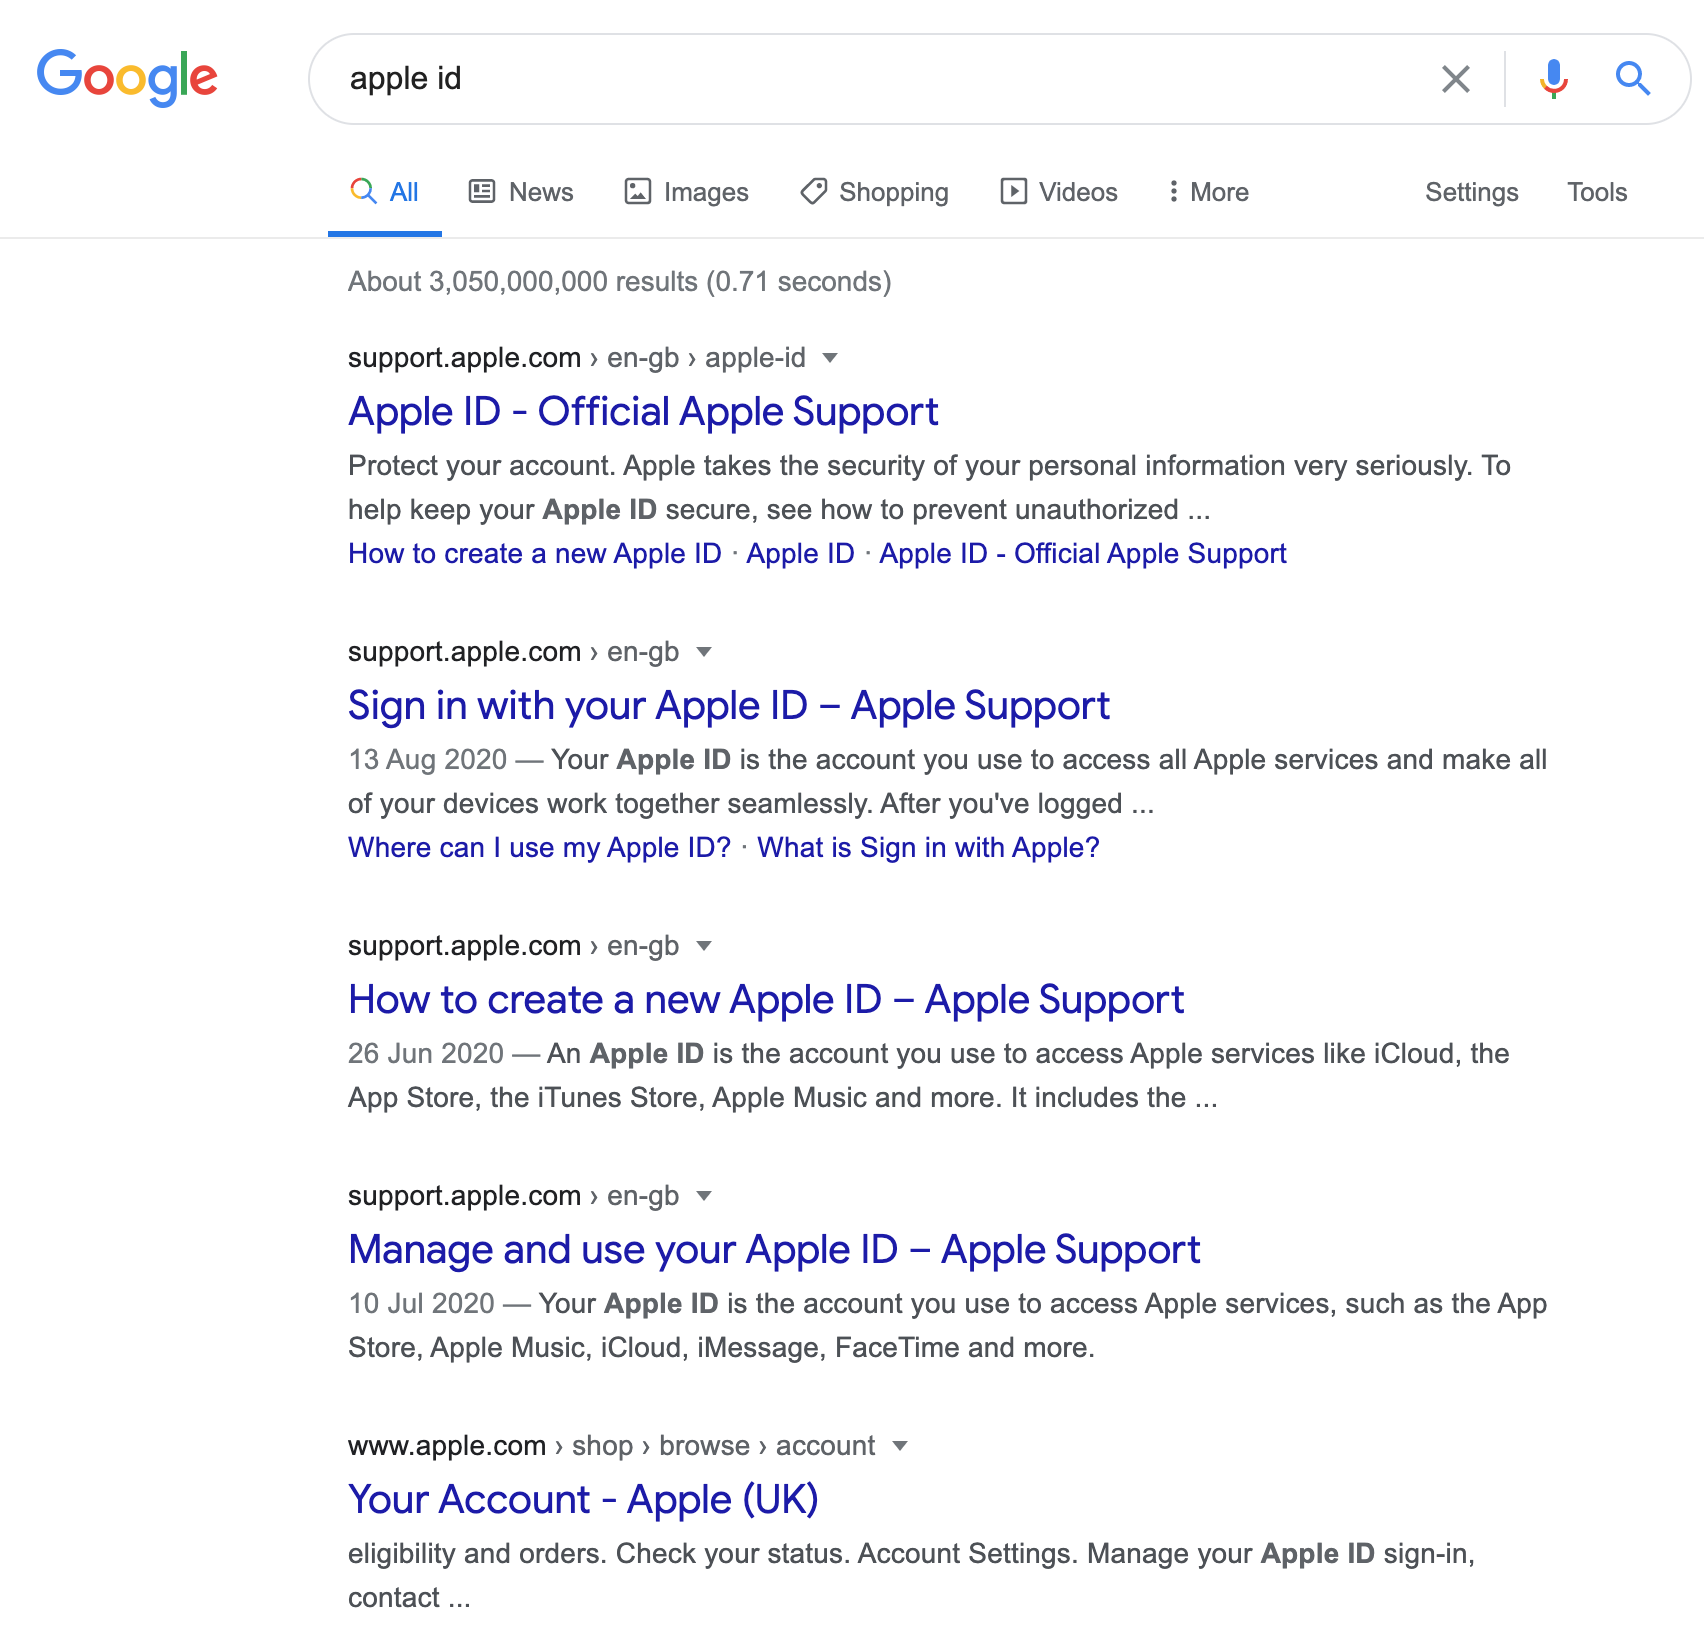 SERP Google search “apple id”